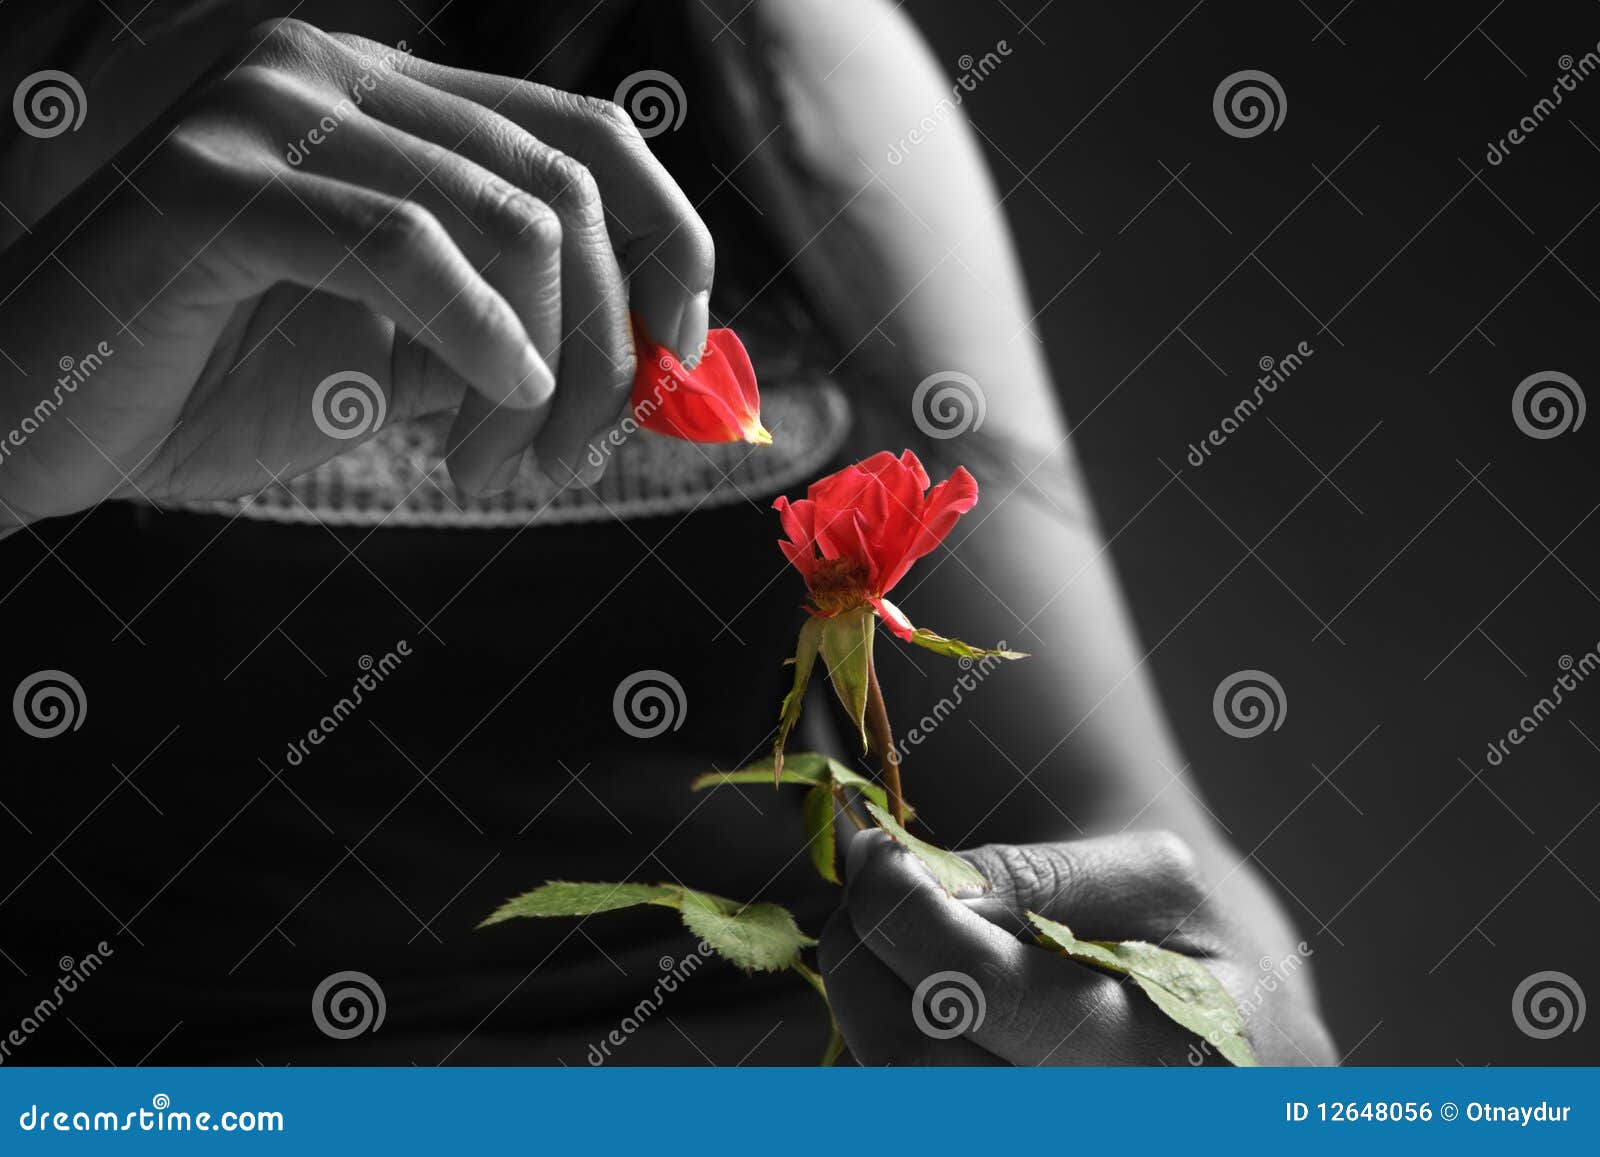 Broken Heart Girl Picking Rose Petals Stock Photo - Image of ...